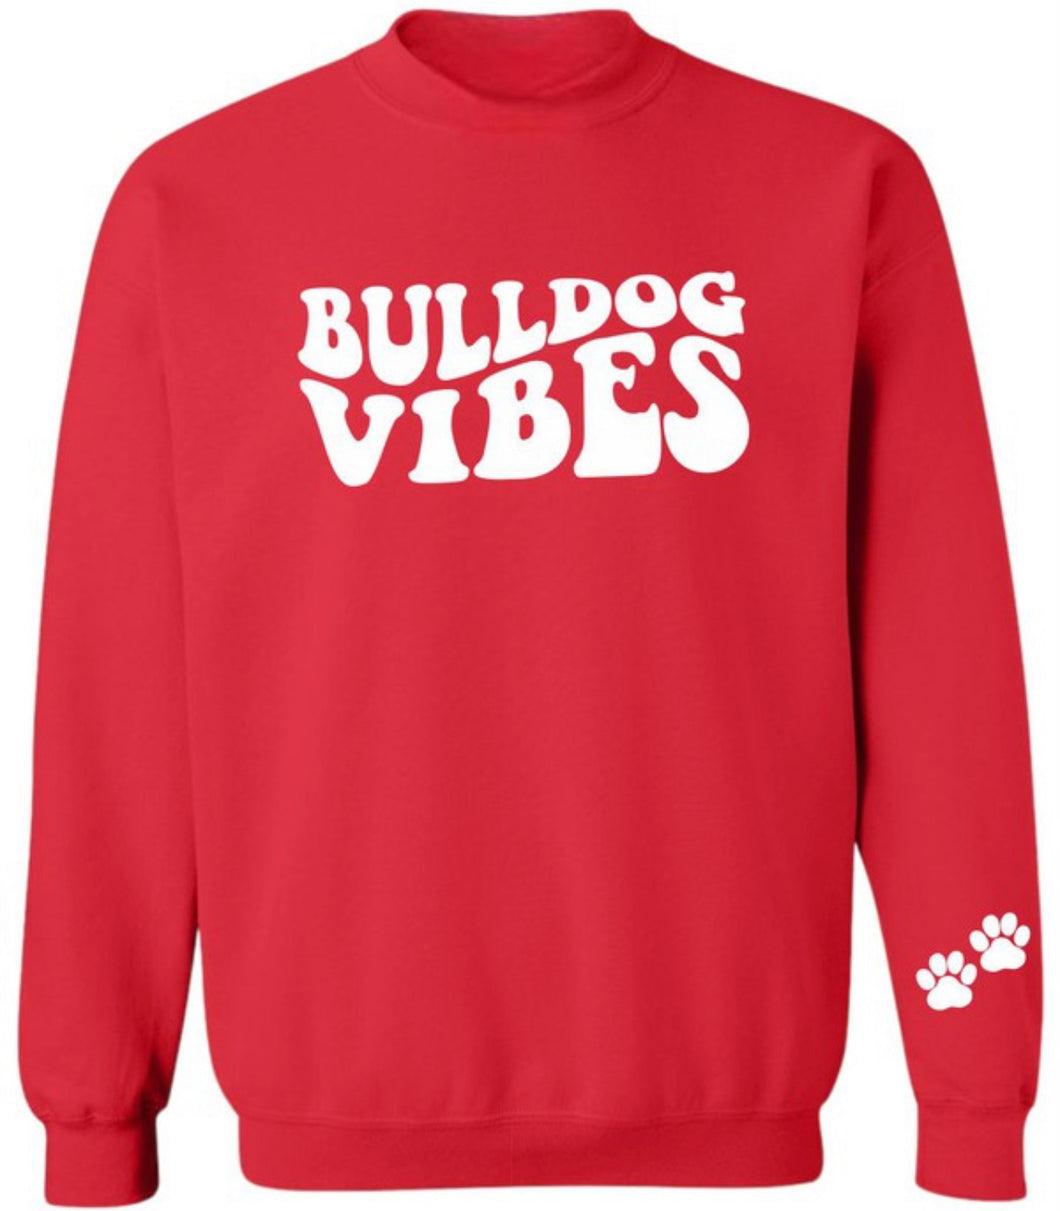 Bulldog Vibes Crewneck Sweatshirt